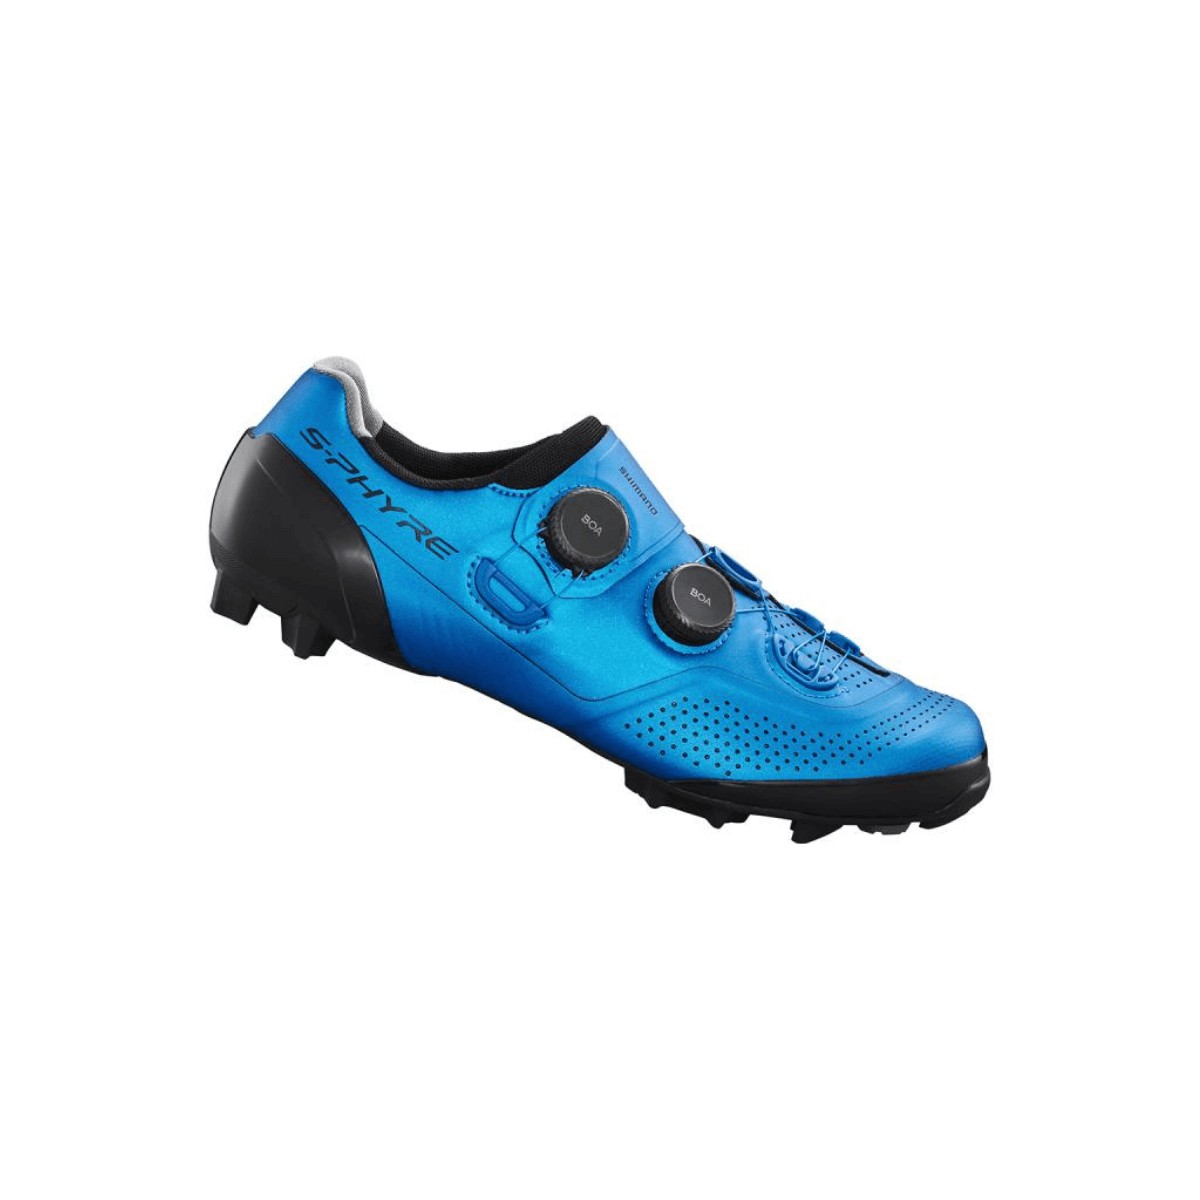 Shimano XC902 MTB-Schuhe Blau, Größe 44,5 - EUR